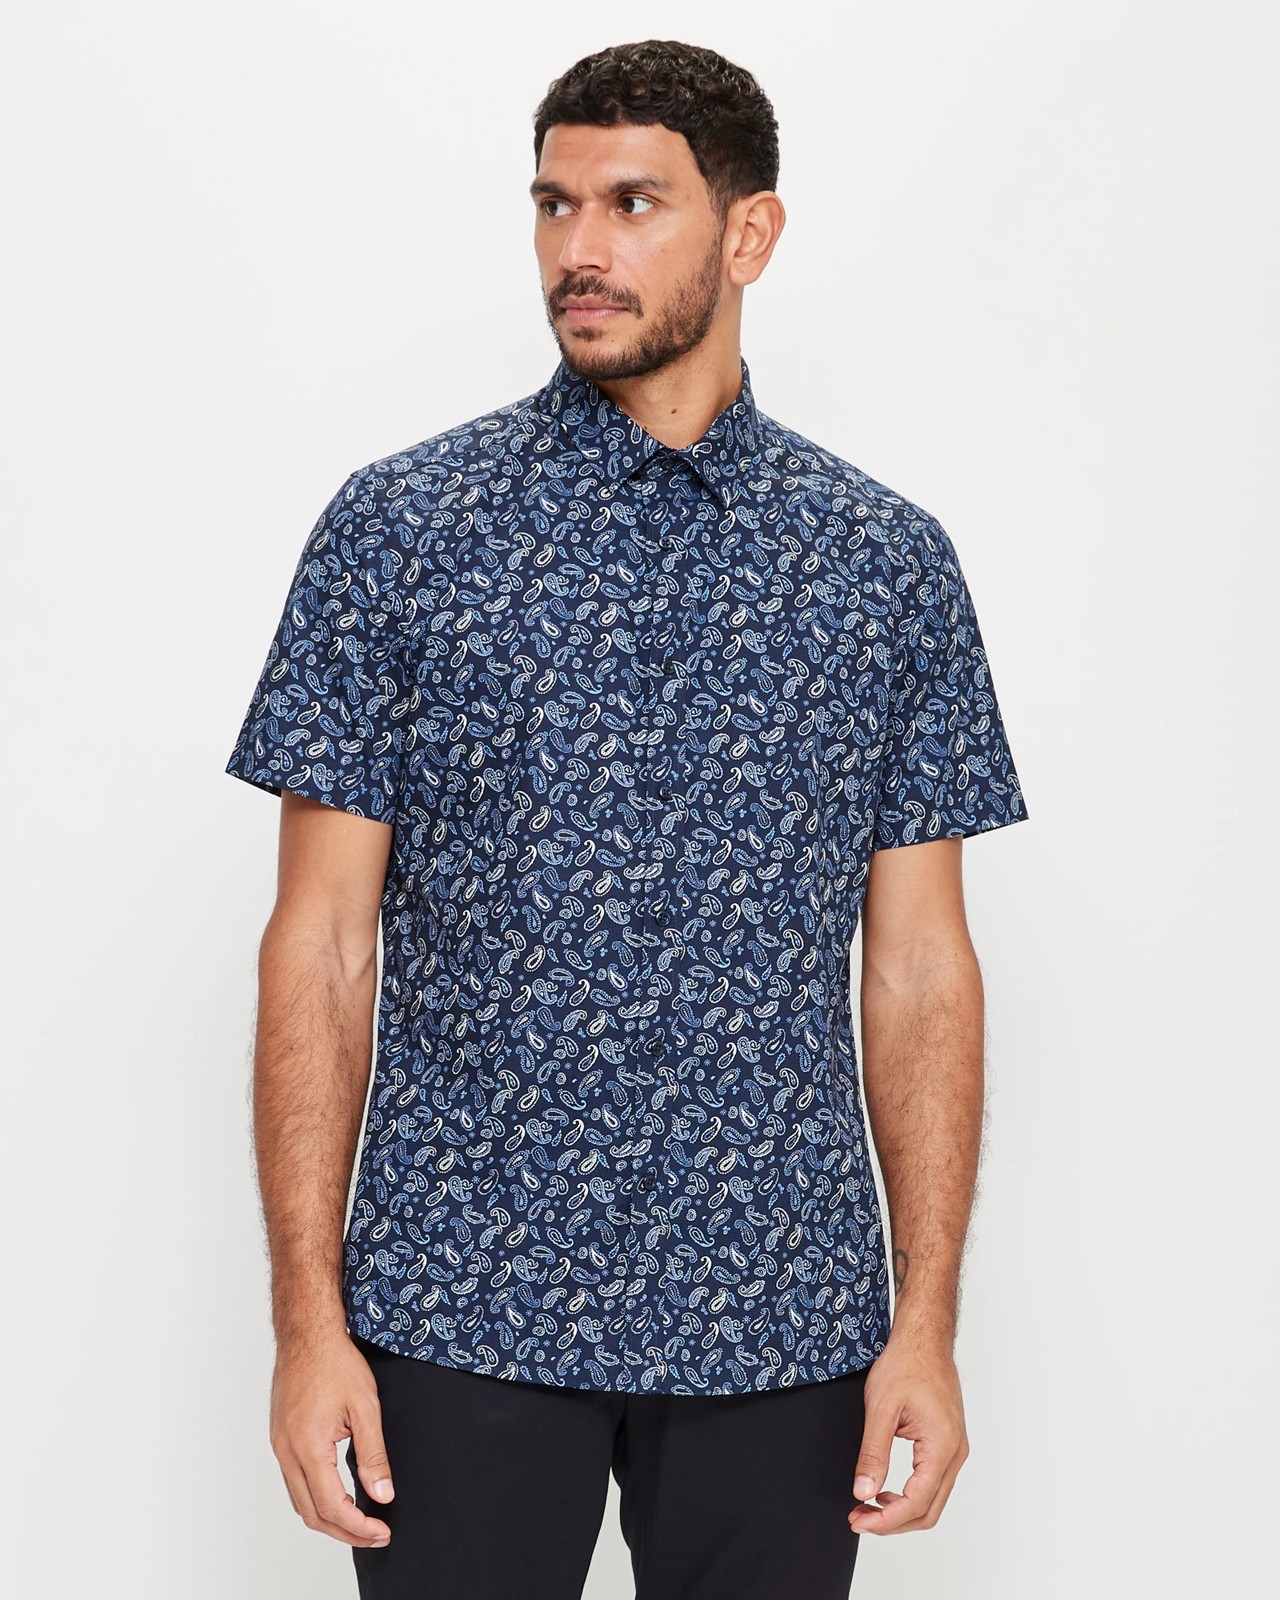 Preview Short Sleeve Paisley Print Shirt | Target Australia